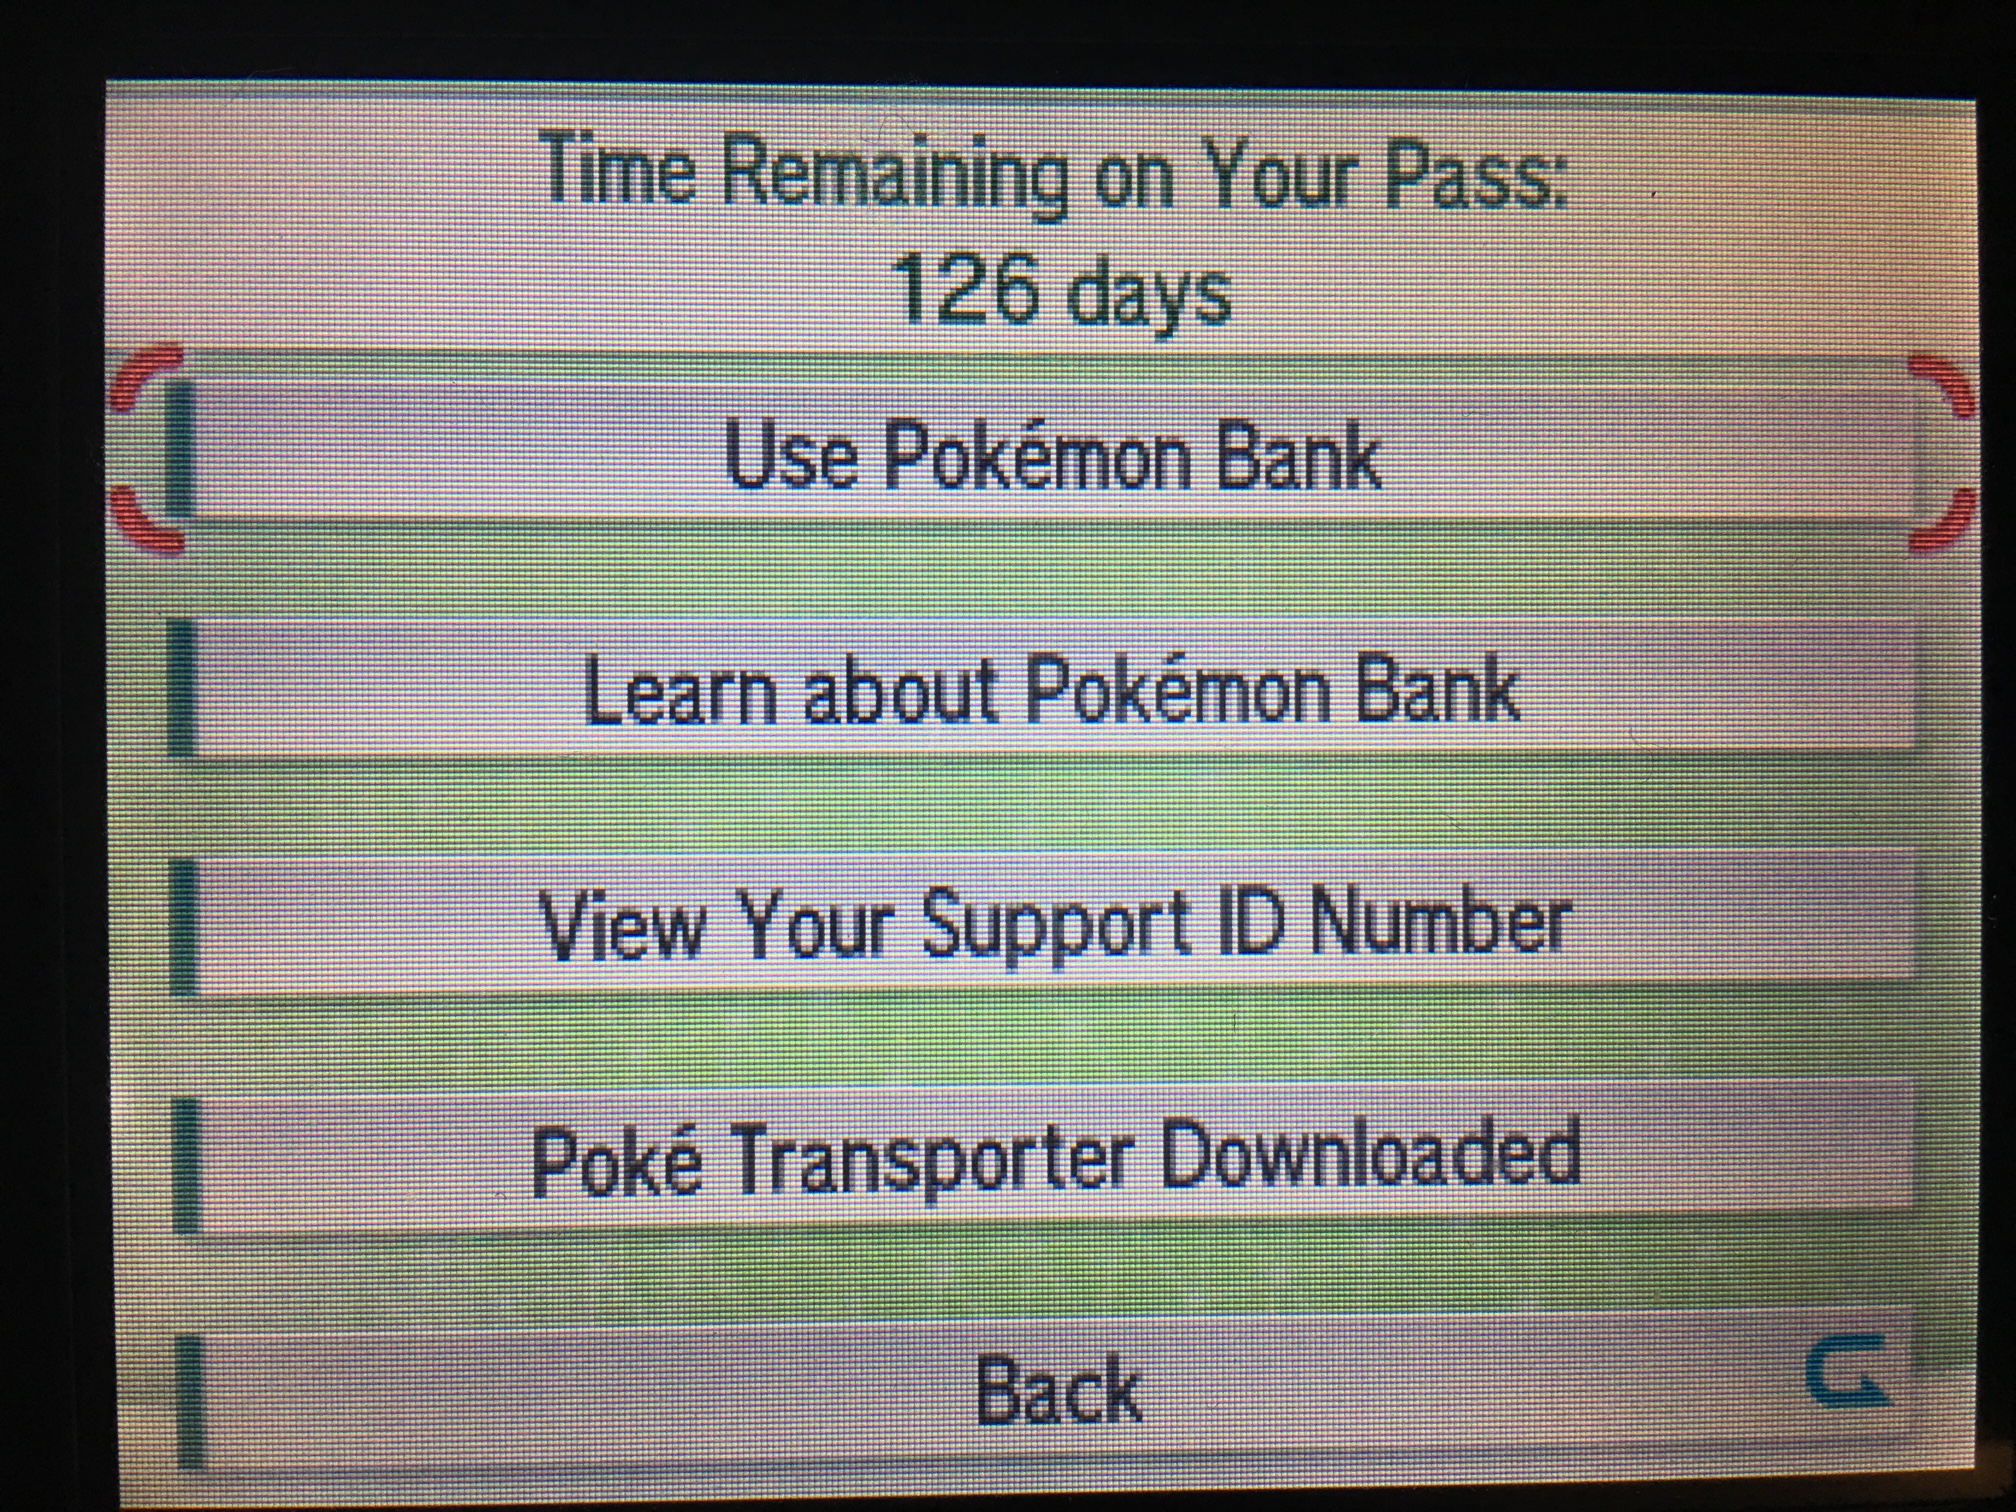 Pokémon Bank - Features